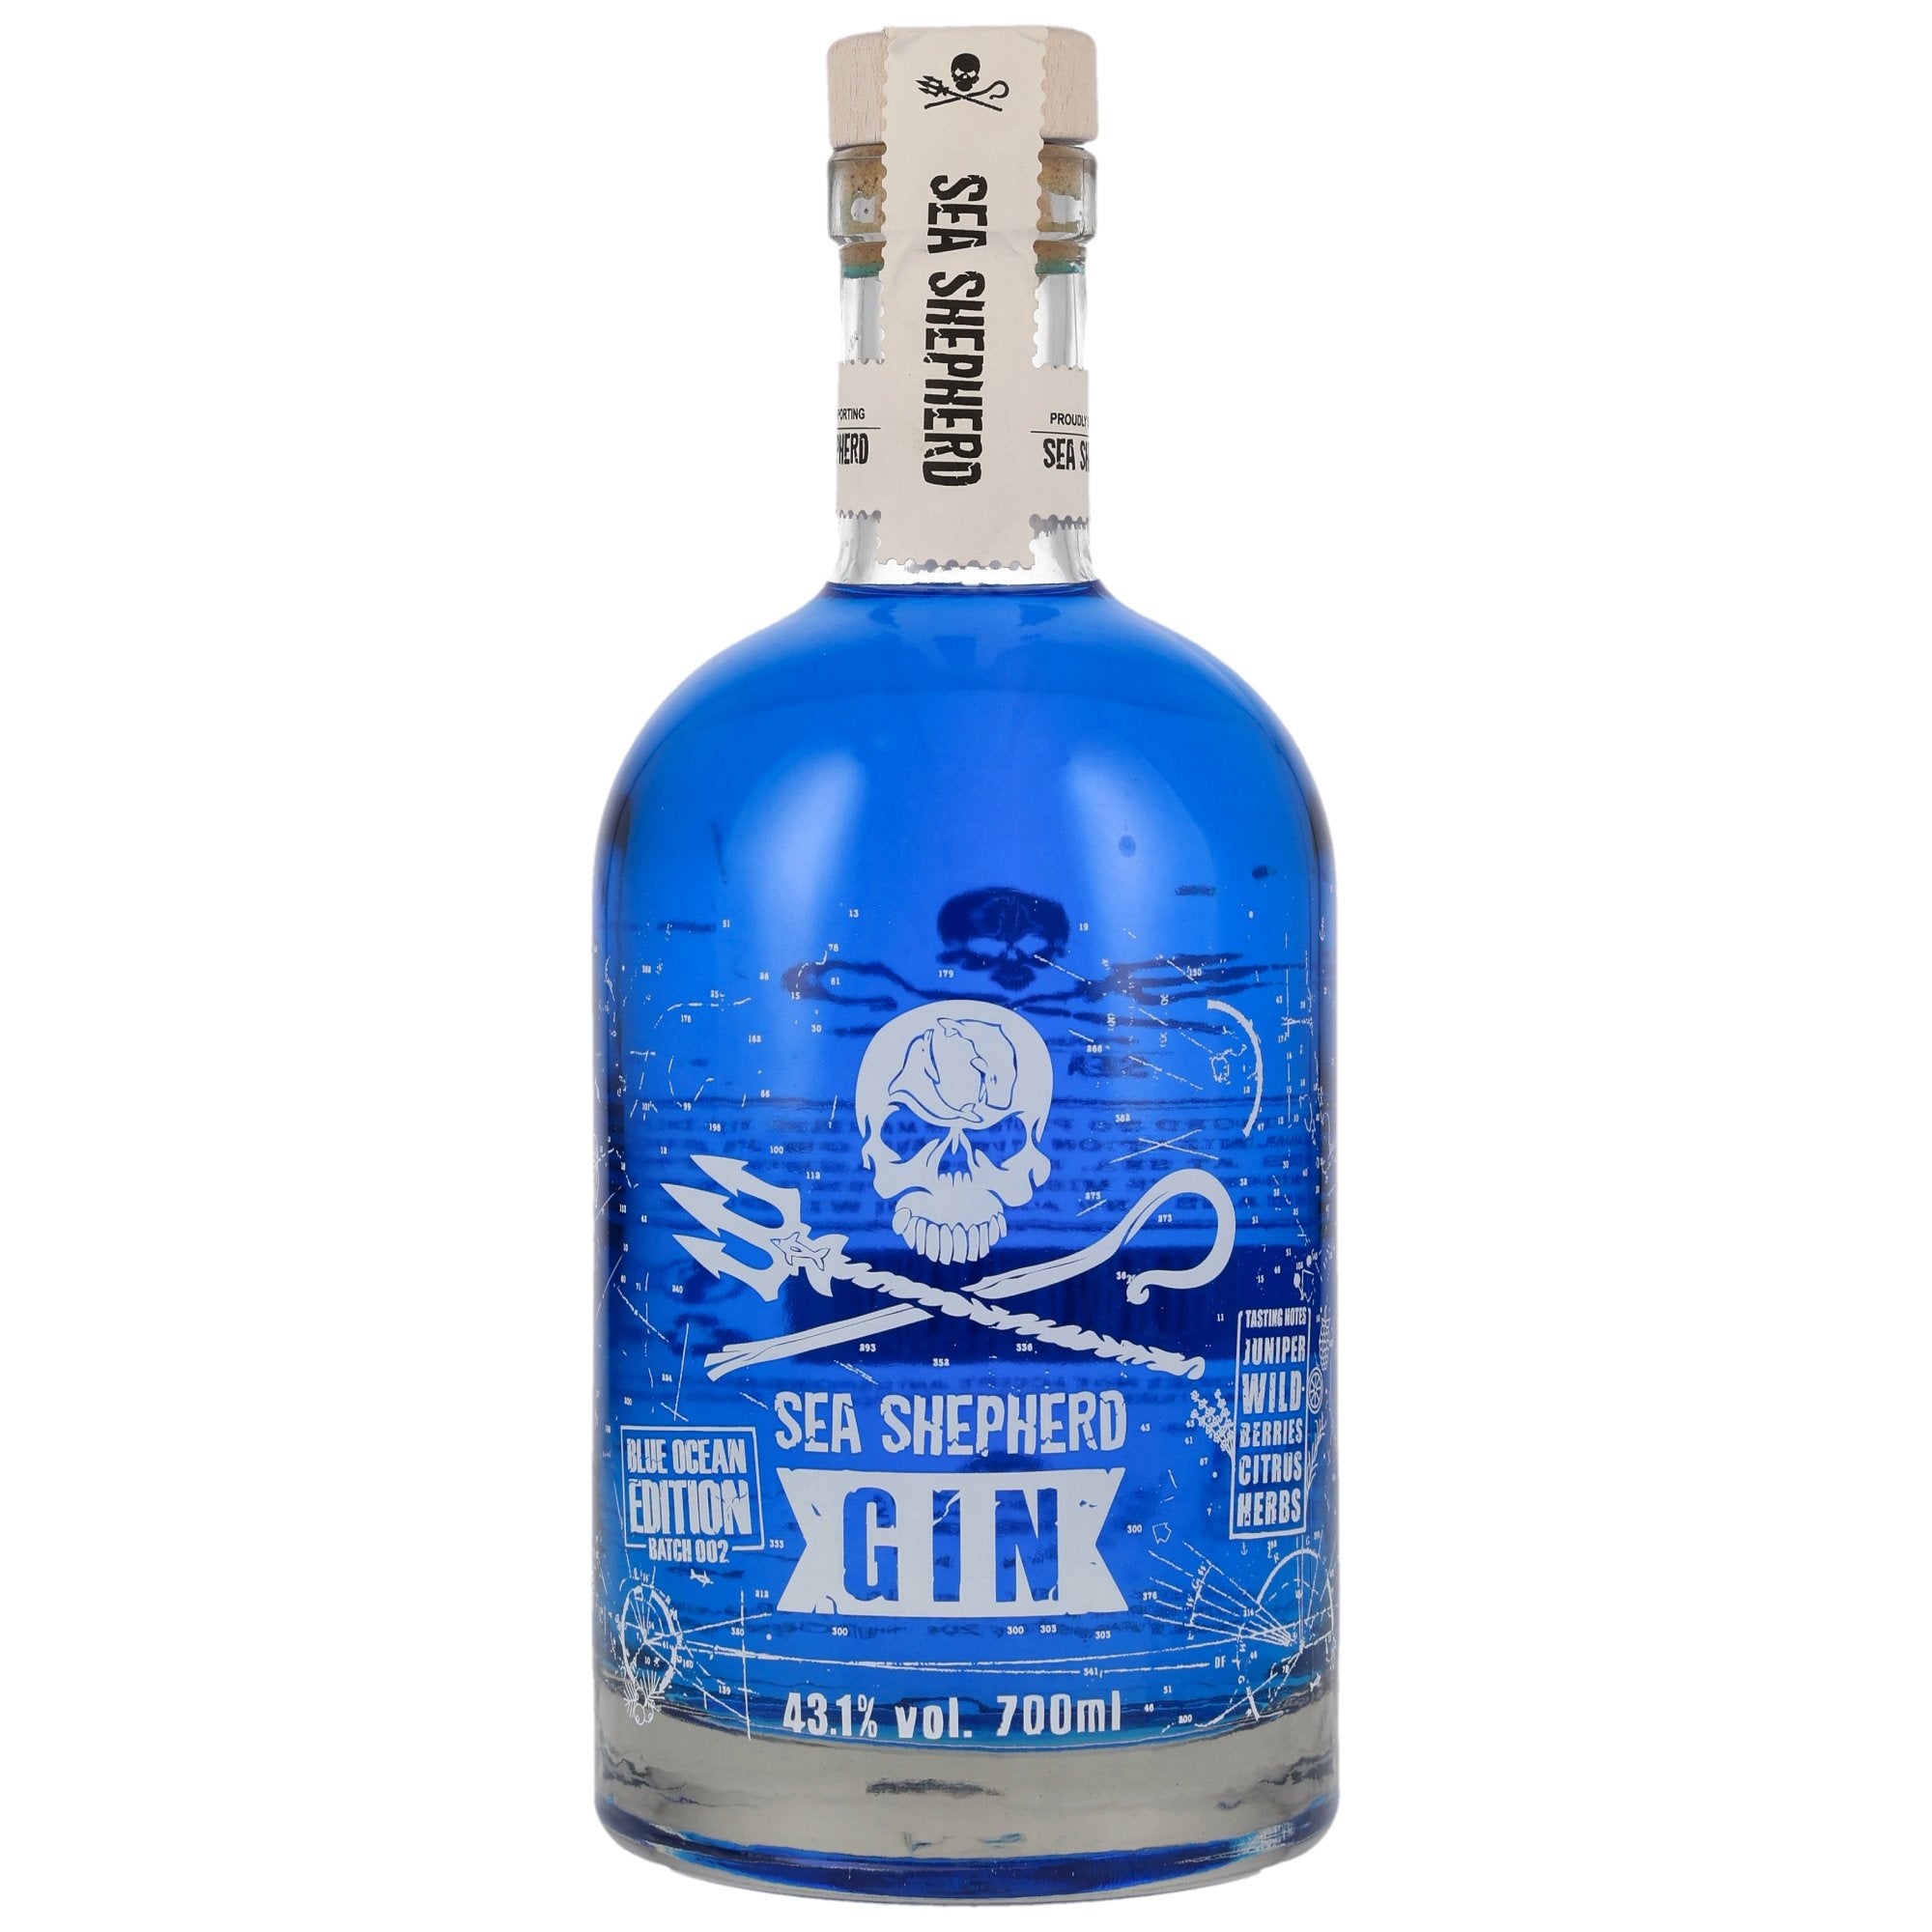 Ocean – Edition 2 Blue Marine Shepherd protection Batch Sea Premium-Malts Gin based –